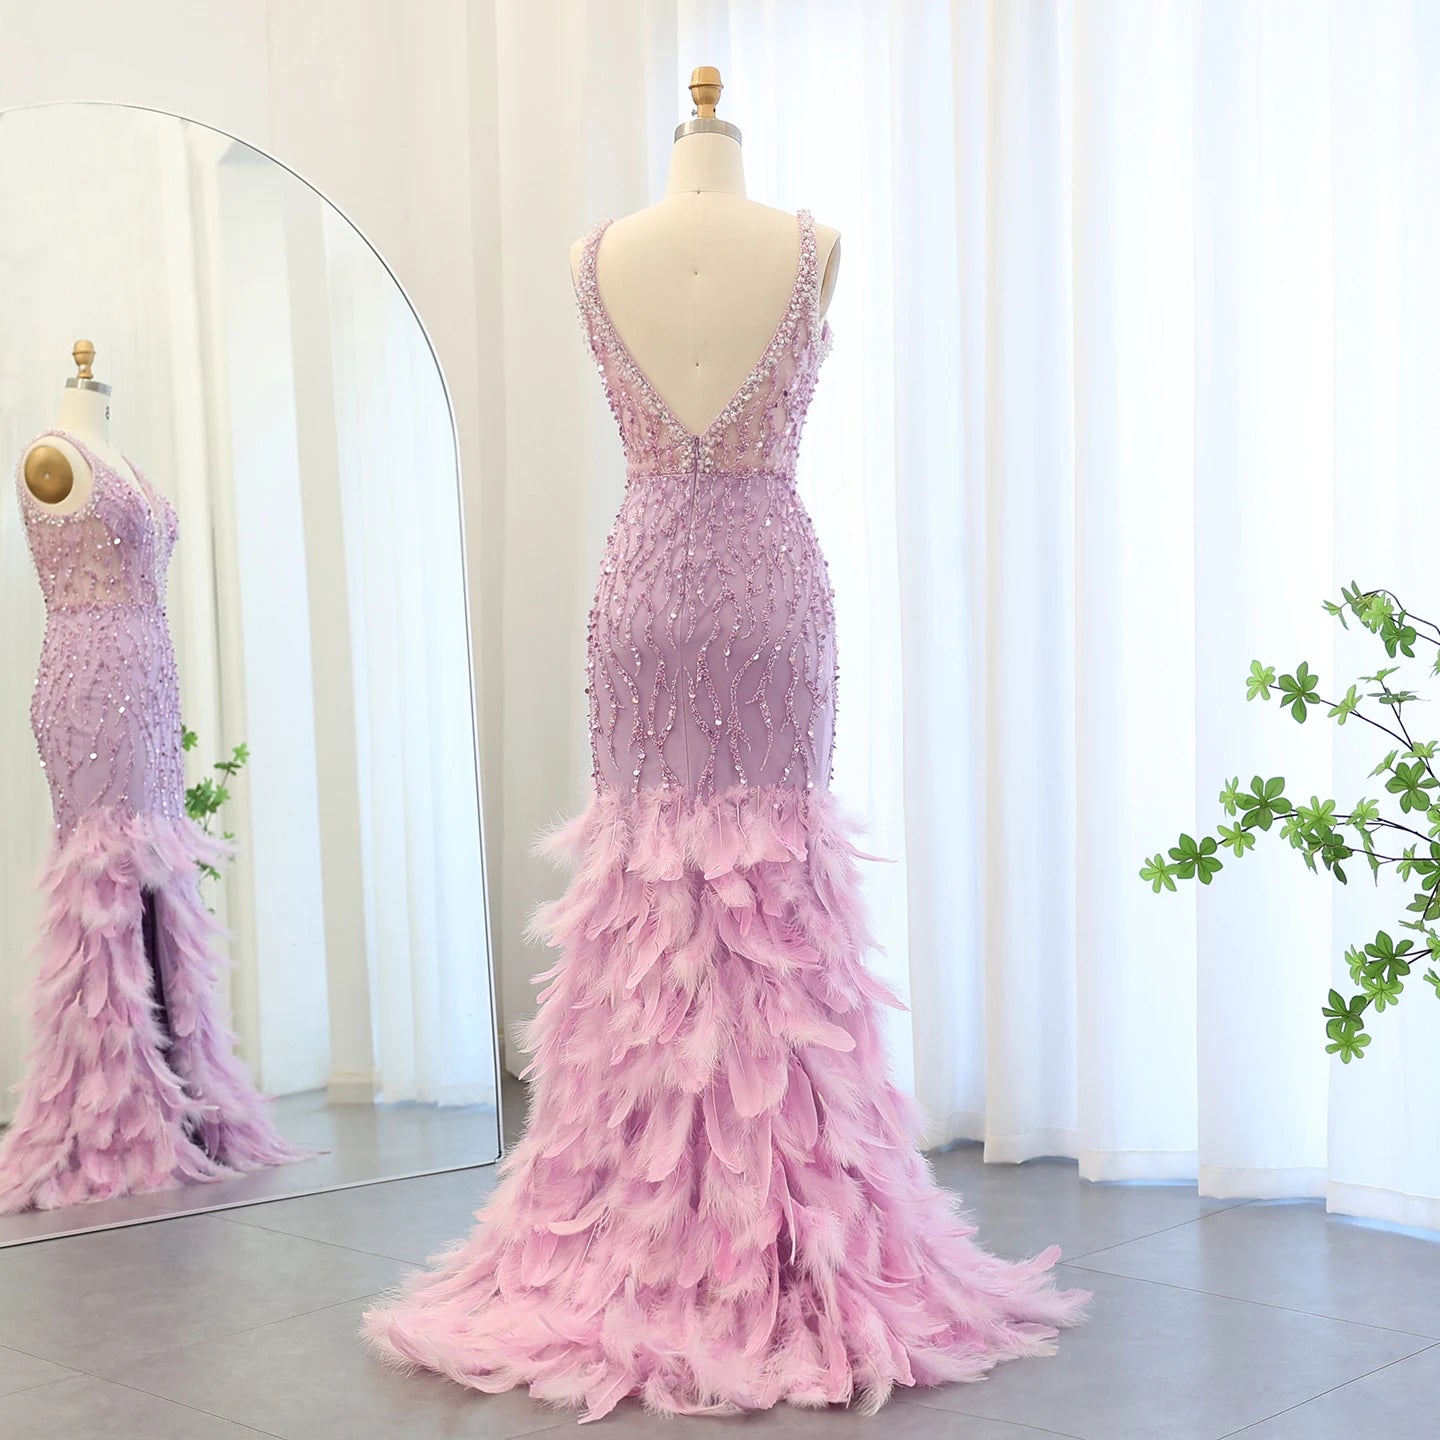 UU-Sharon Said Luxury Feathers Pink Mermaid Evening Dresses for Women Wedding V-Neck Blue Side Slit Long Prom Party Dress